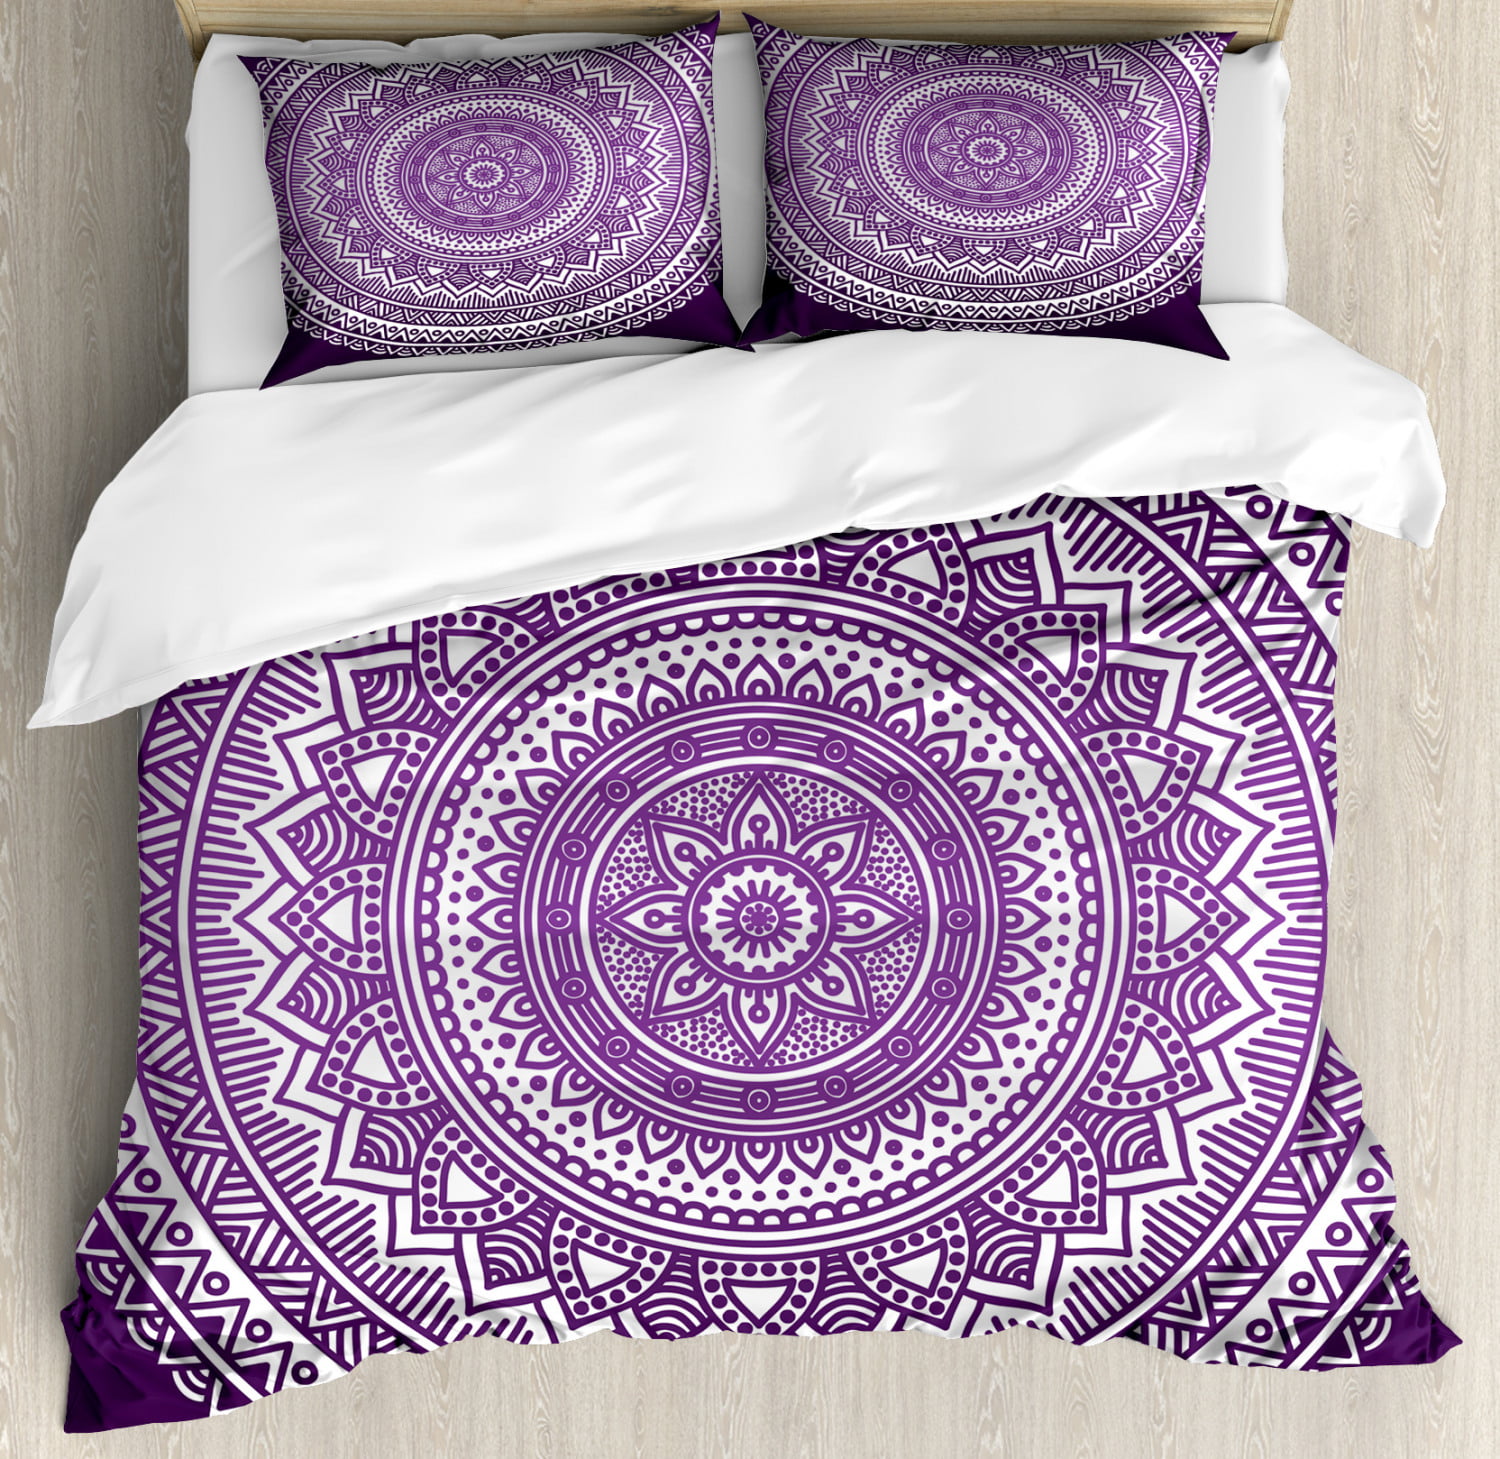 Blue Lotus Hippie Mandala Boho Bedding Queen Size Bed Sheet Set Pillow Covers 